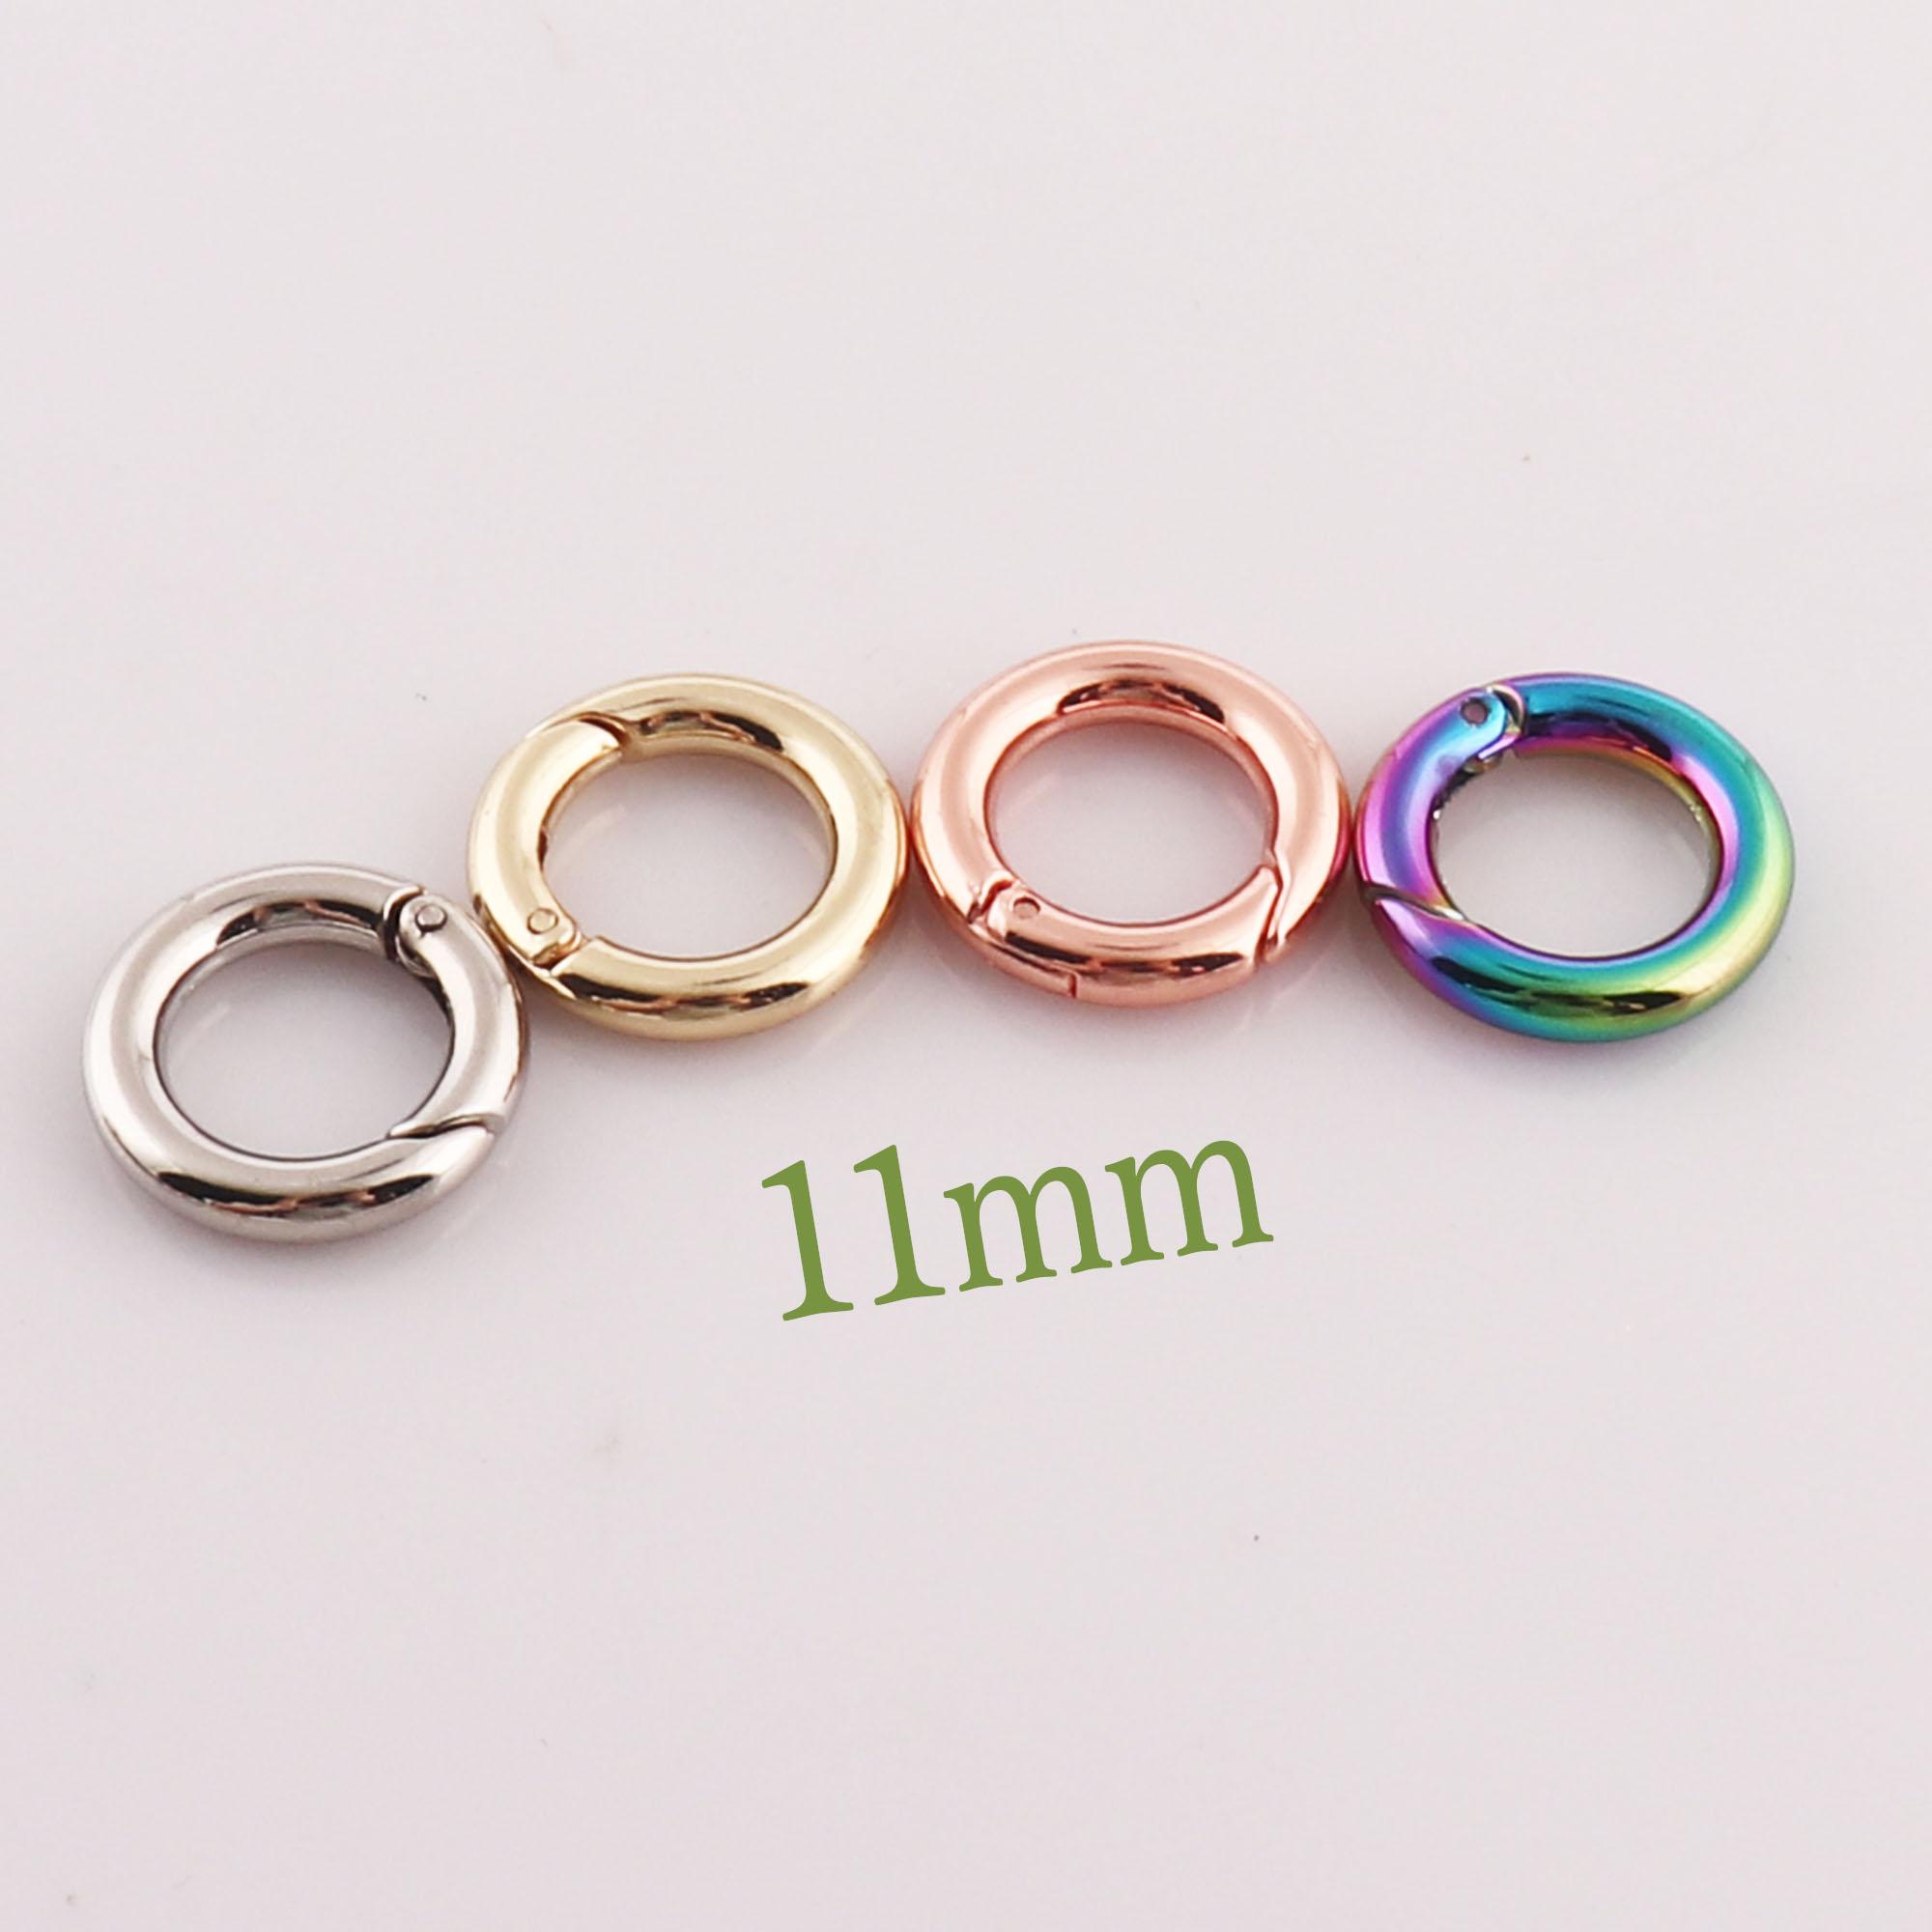 Изображение товара: 20 pcs Gold/Silver/Rose Gold/Rainbow Spring Ring buckles,Snap Ring Screw Spring Gate Ring Clasp,for webbing Purse Bag Handbag -3